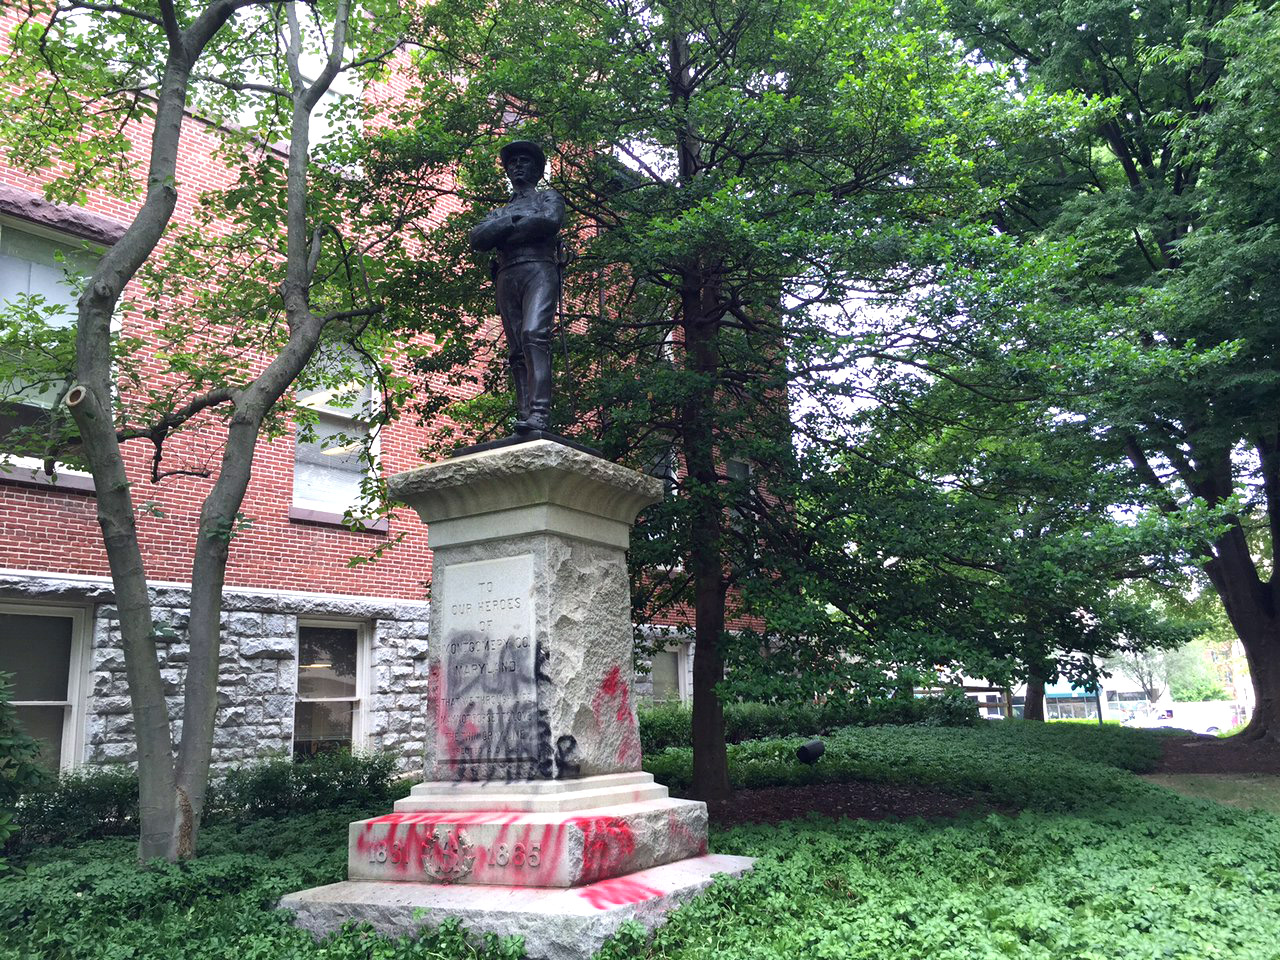 Confederate statue in Rockville vandalized